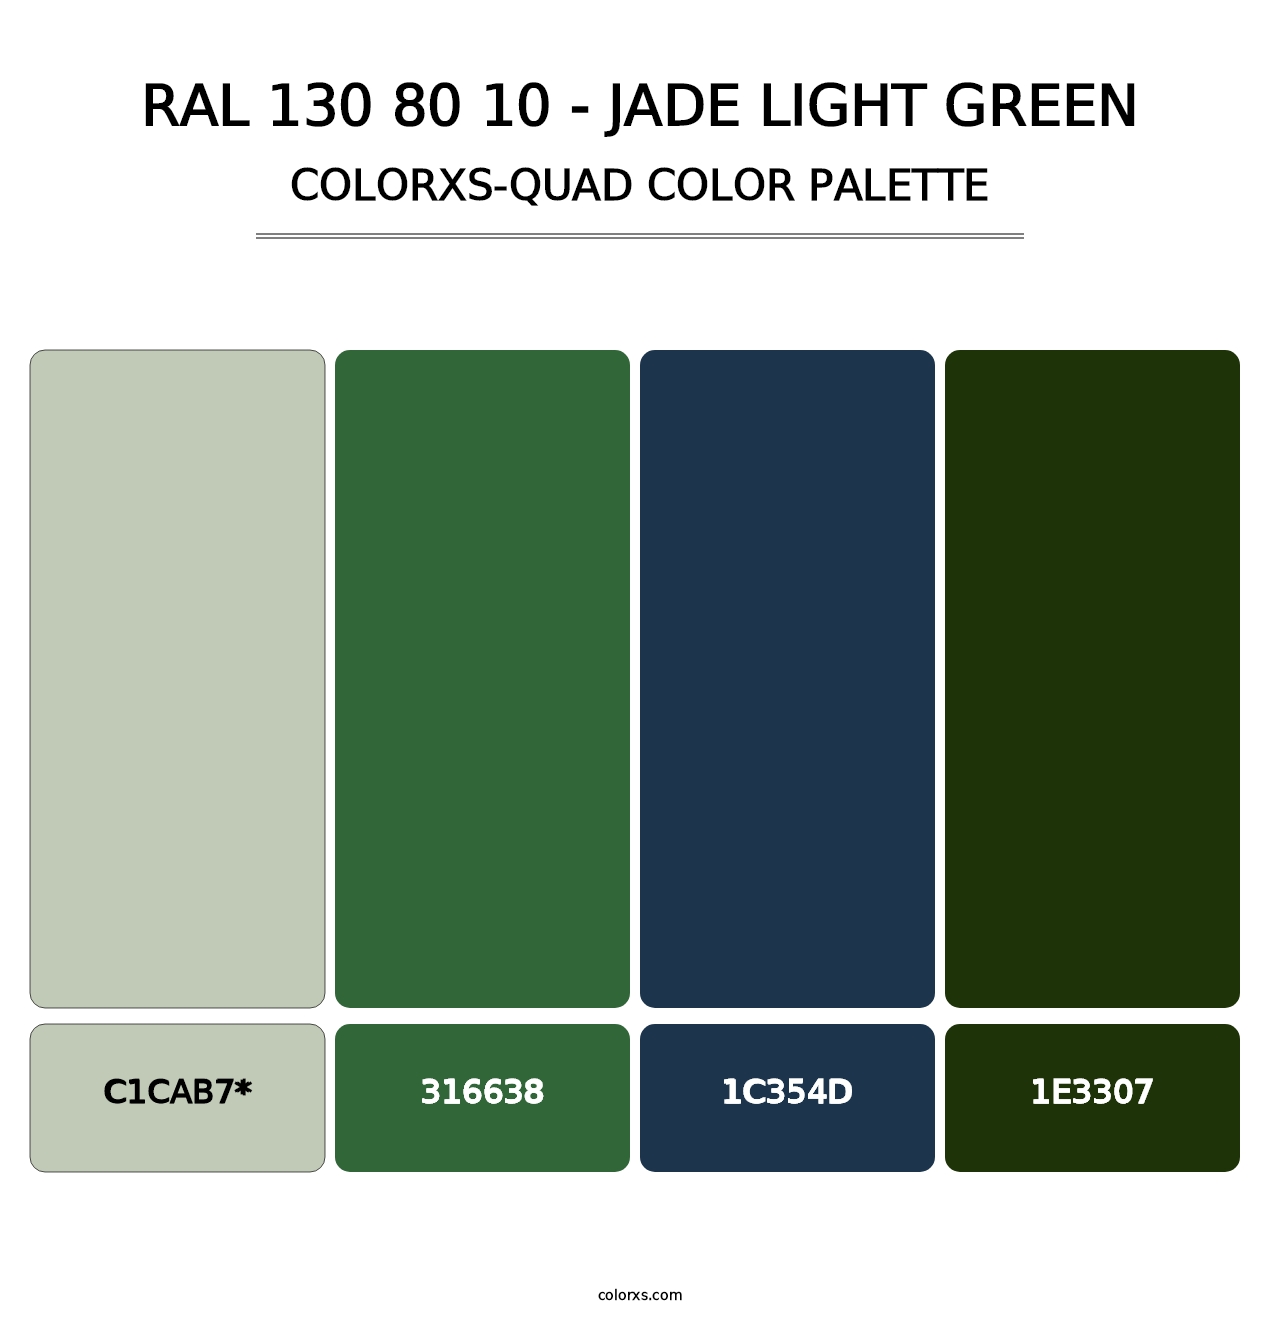 RAL 130 80 10 - Jade Light Green - Colorxs Quad Palette